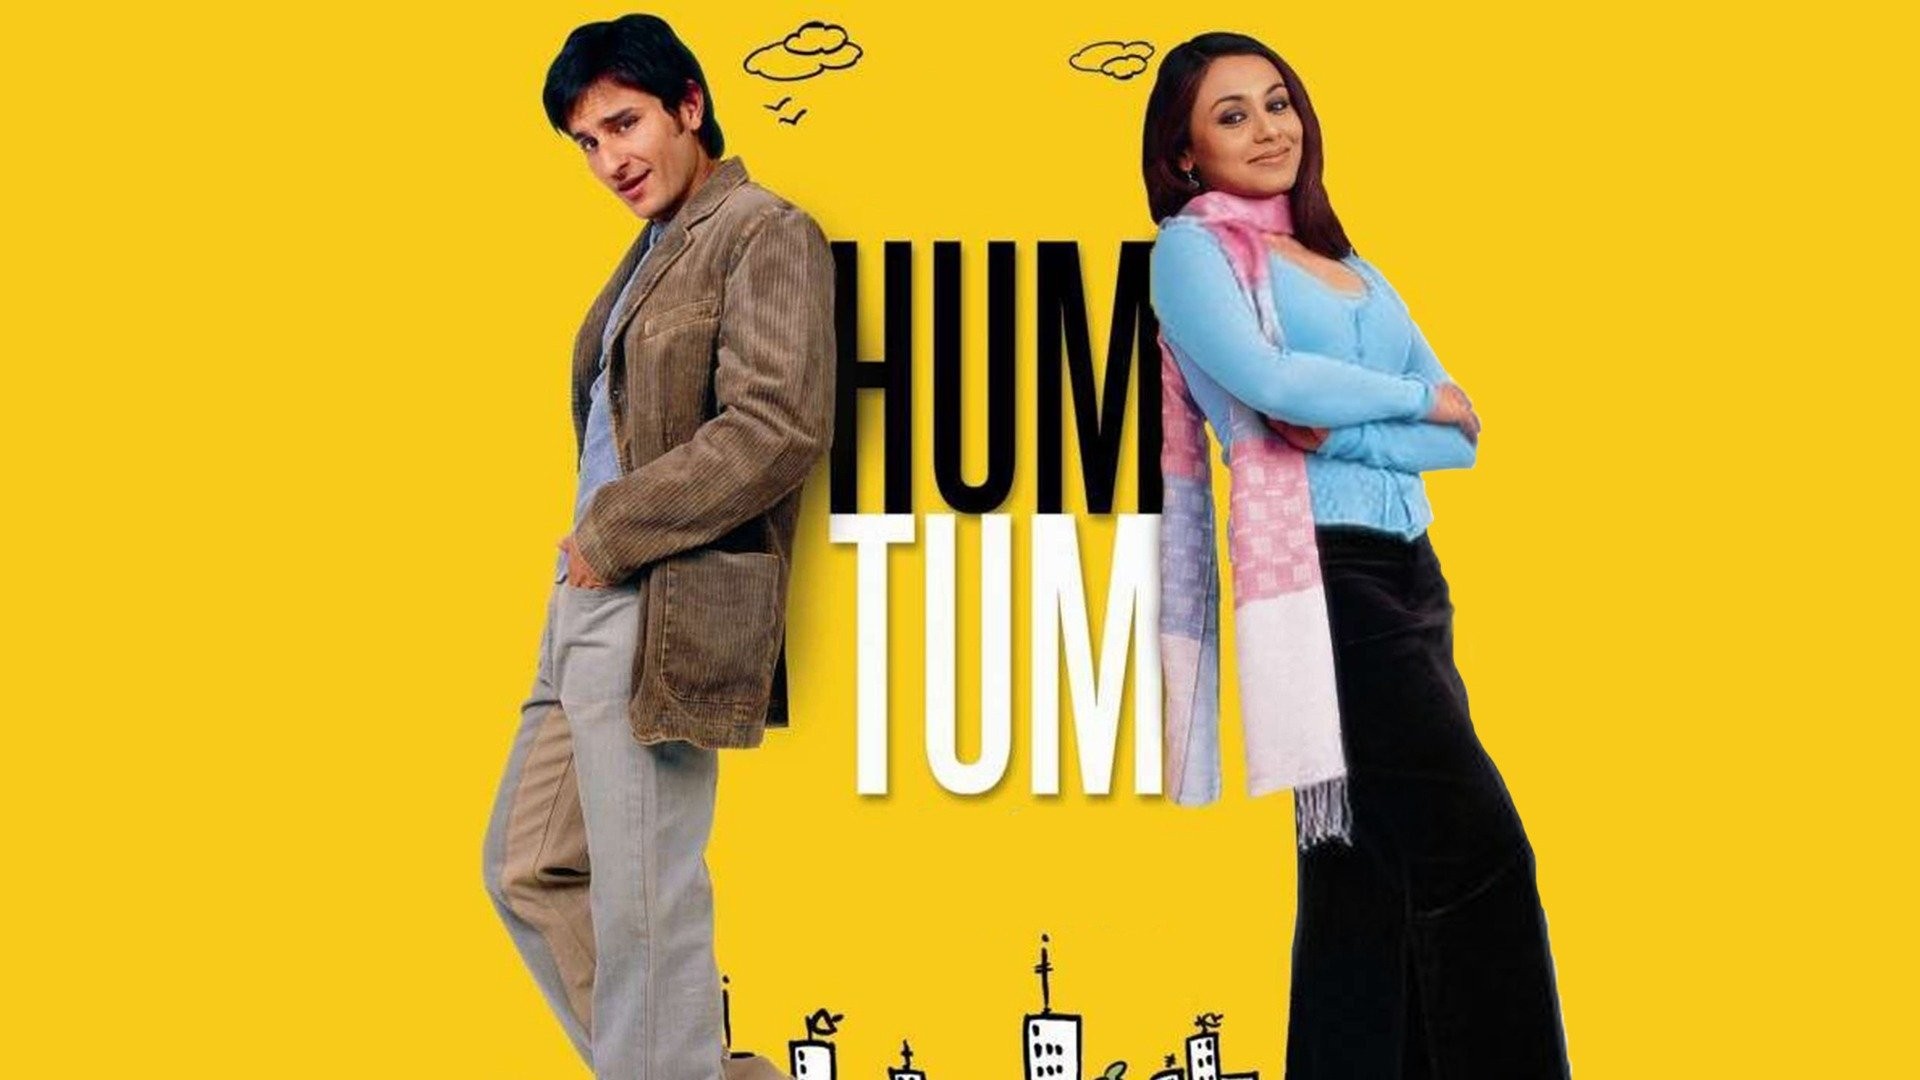 Hum Tum music launch - Telugu cinema